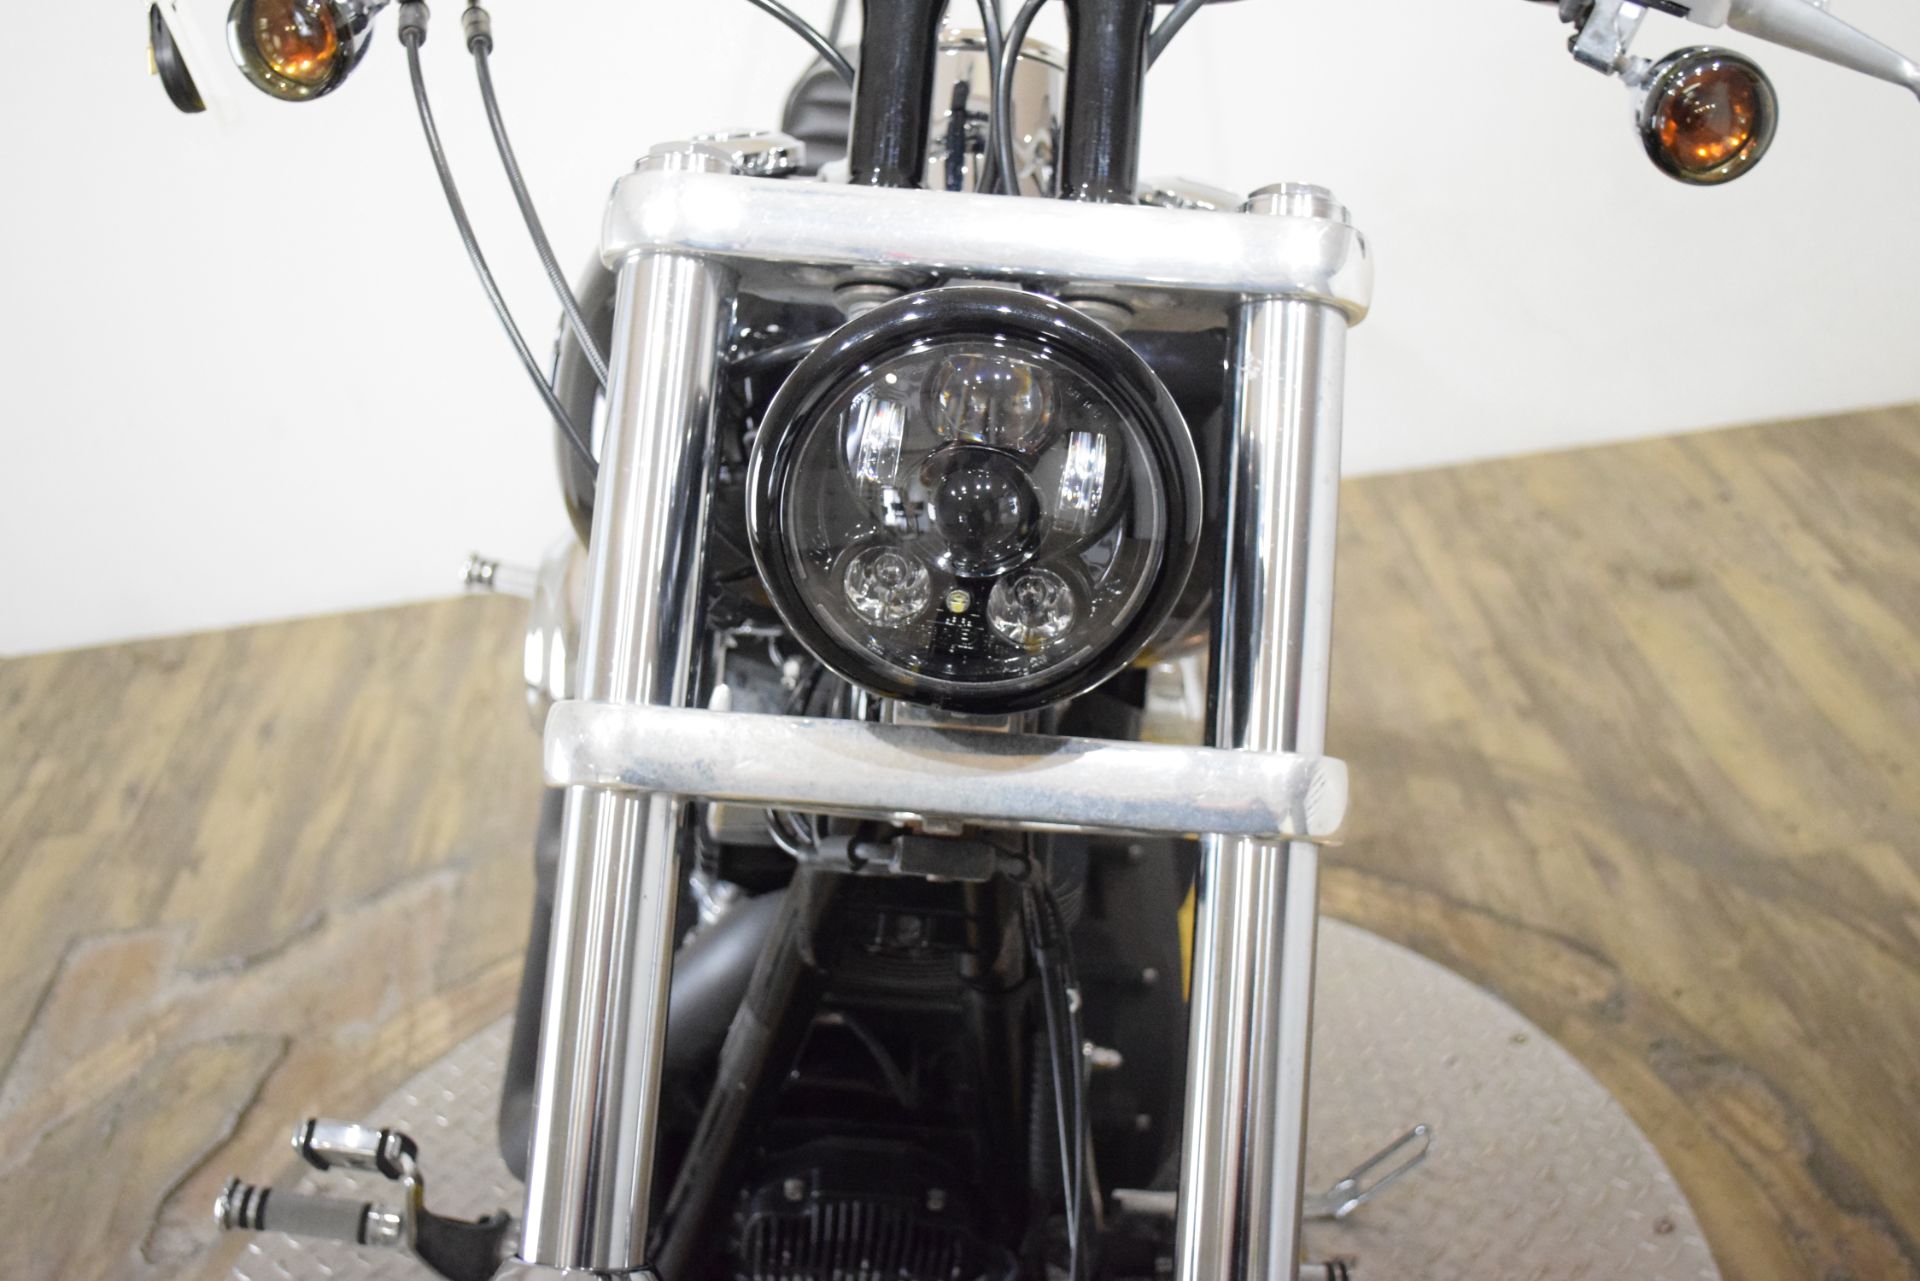 2016 Harley-Davidson Wide Glide® in Wauconda, Illinois - Photo 12